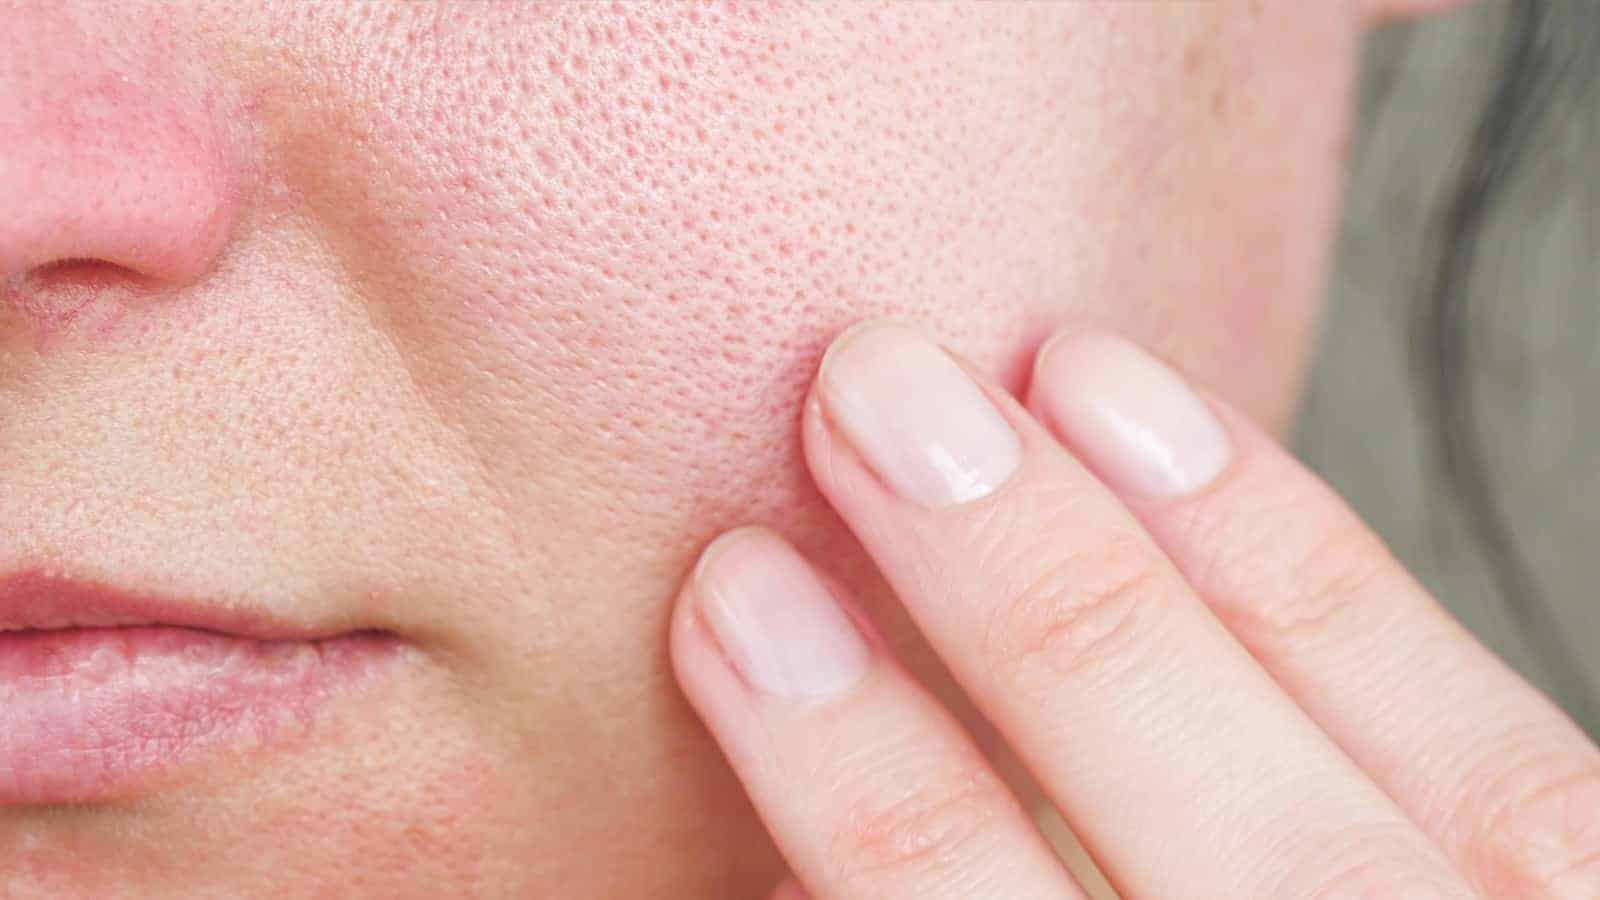 Dermatologists Reveal 10 Ways to Shrink Large Pores